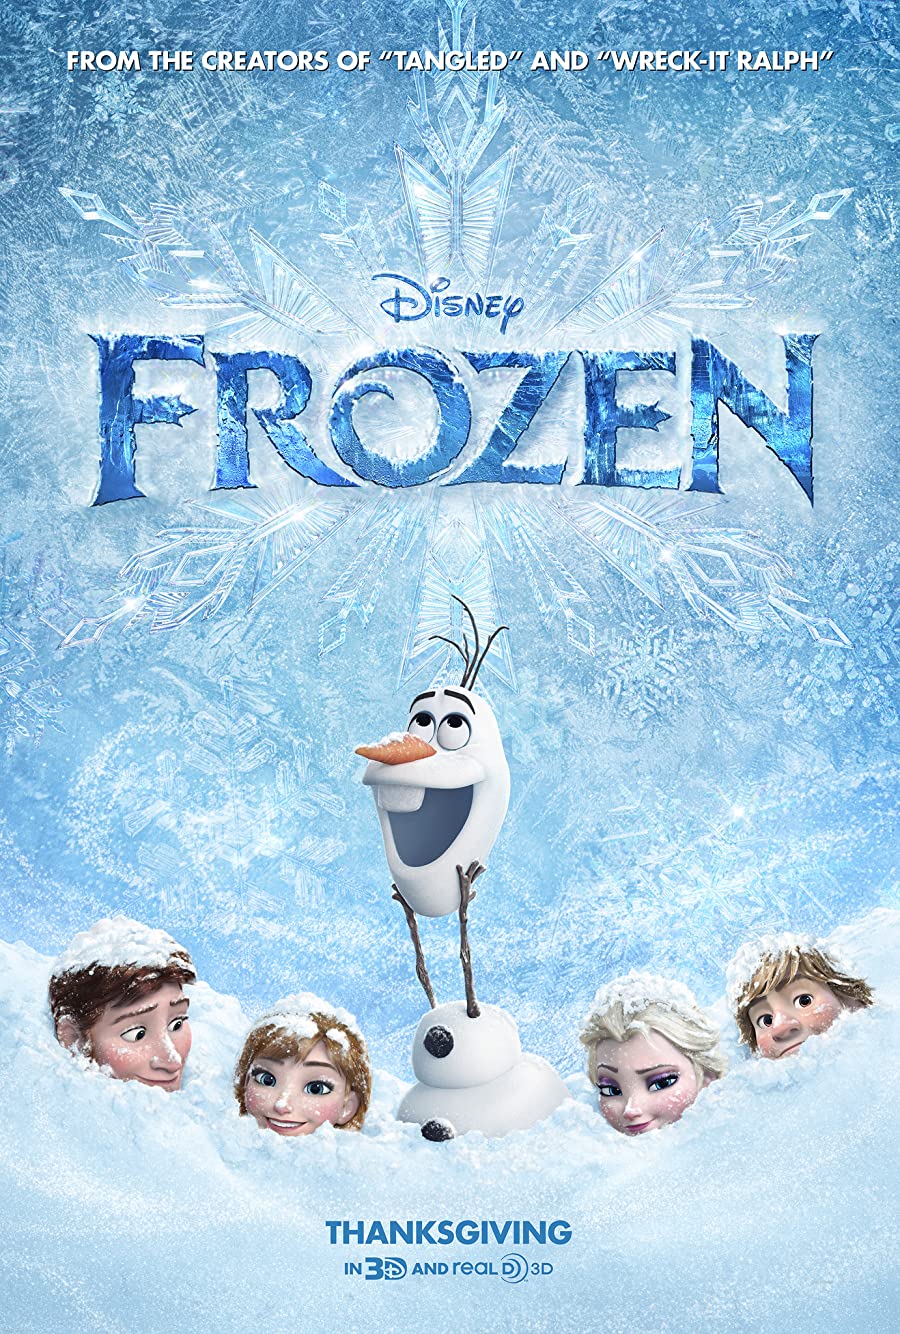 دانلود فیلم Frozen 2013